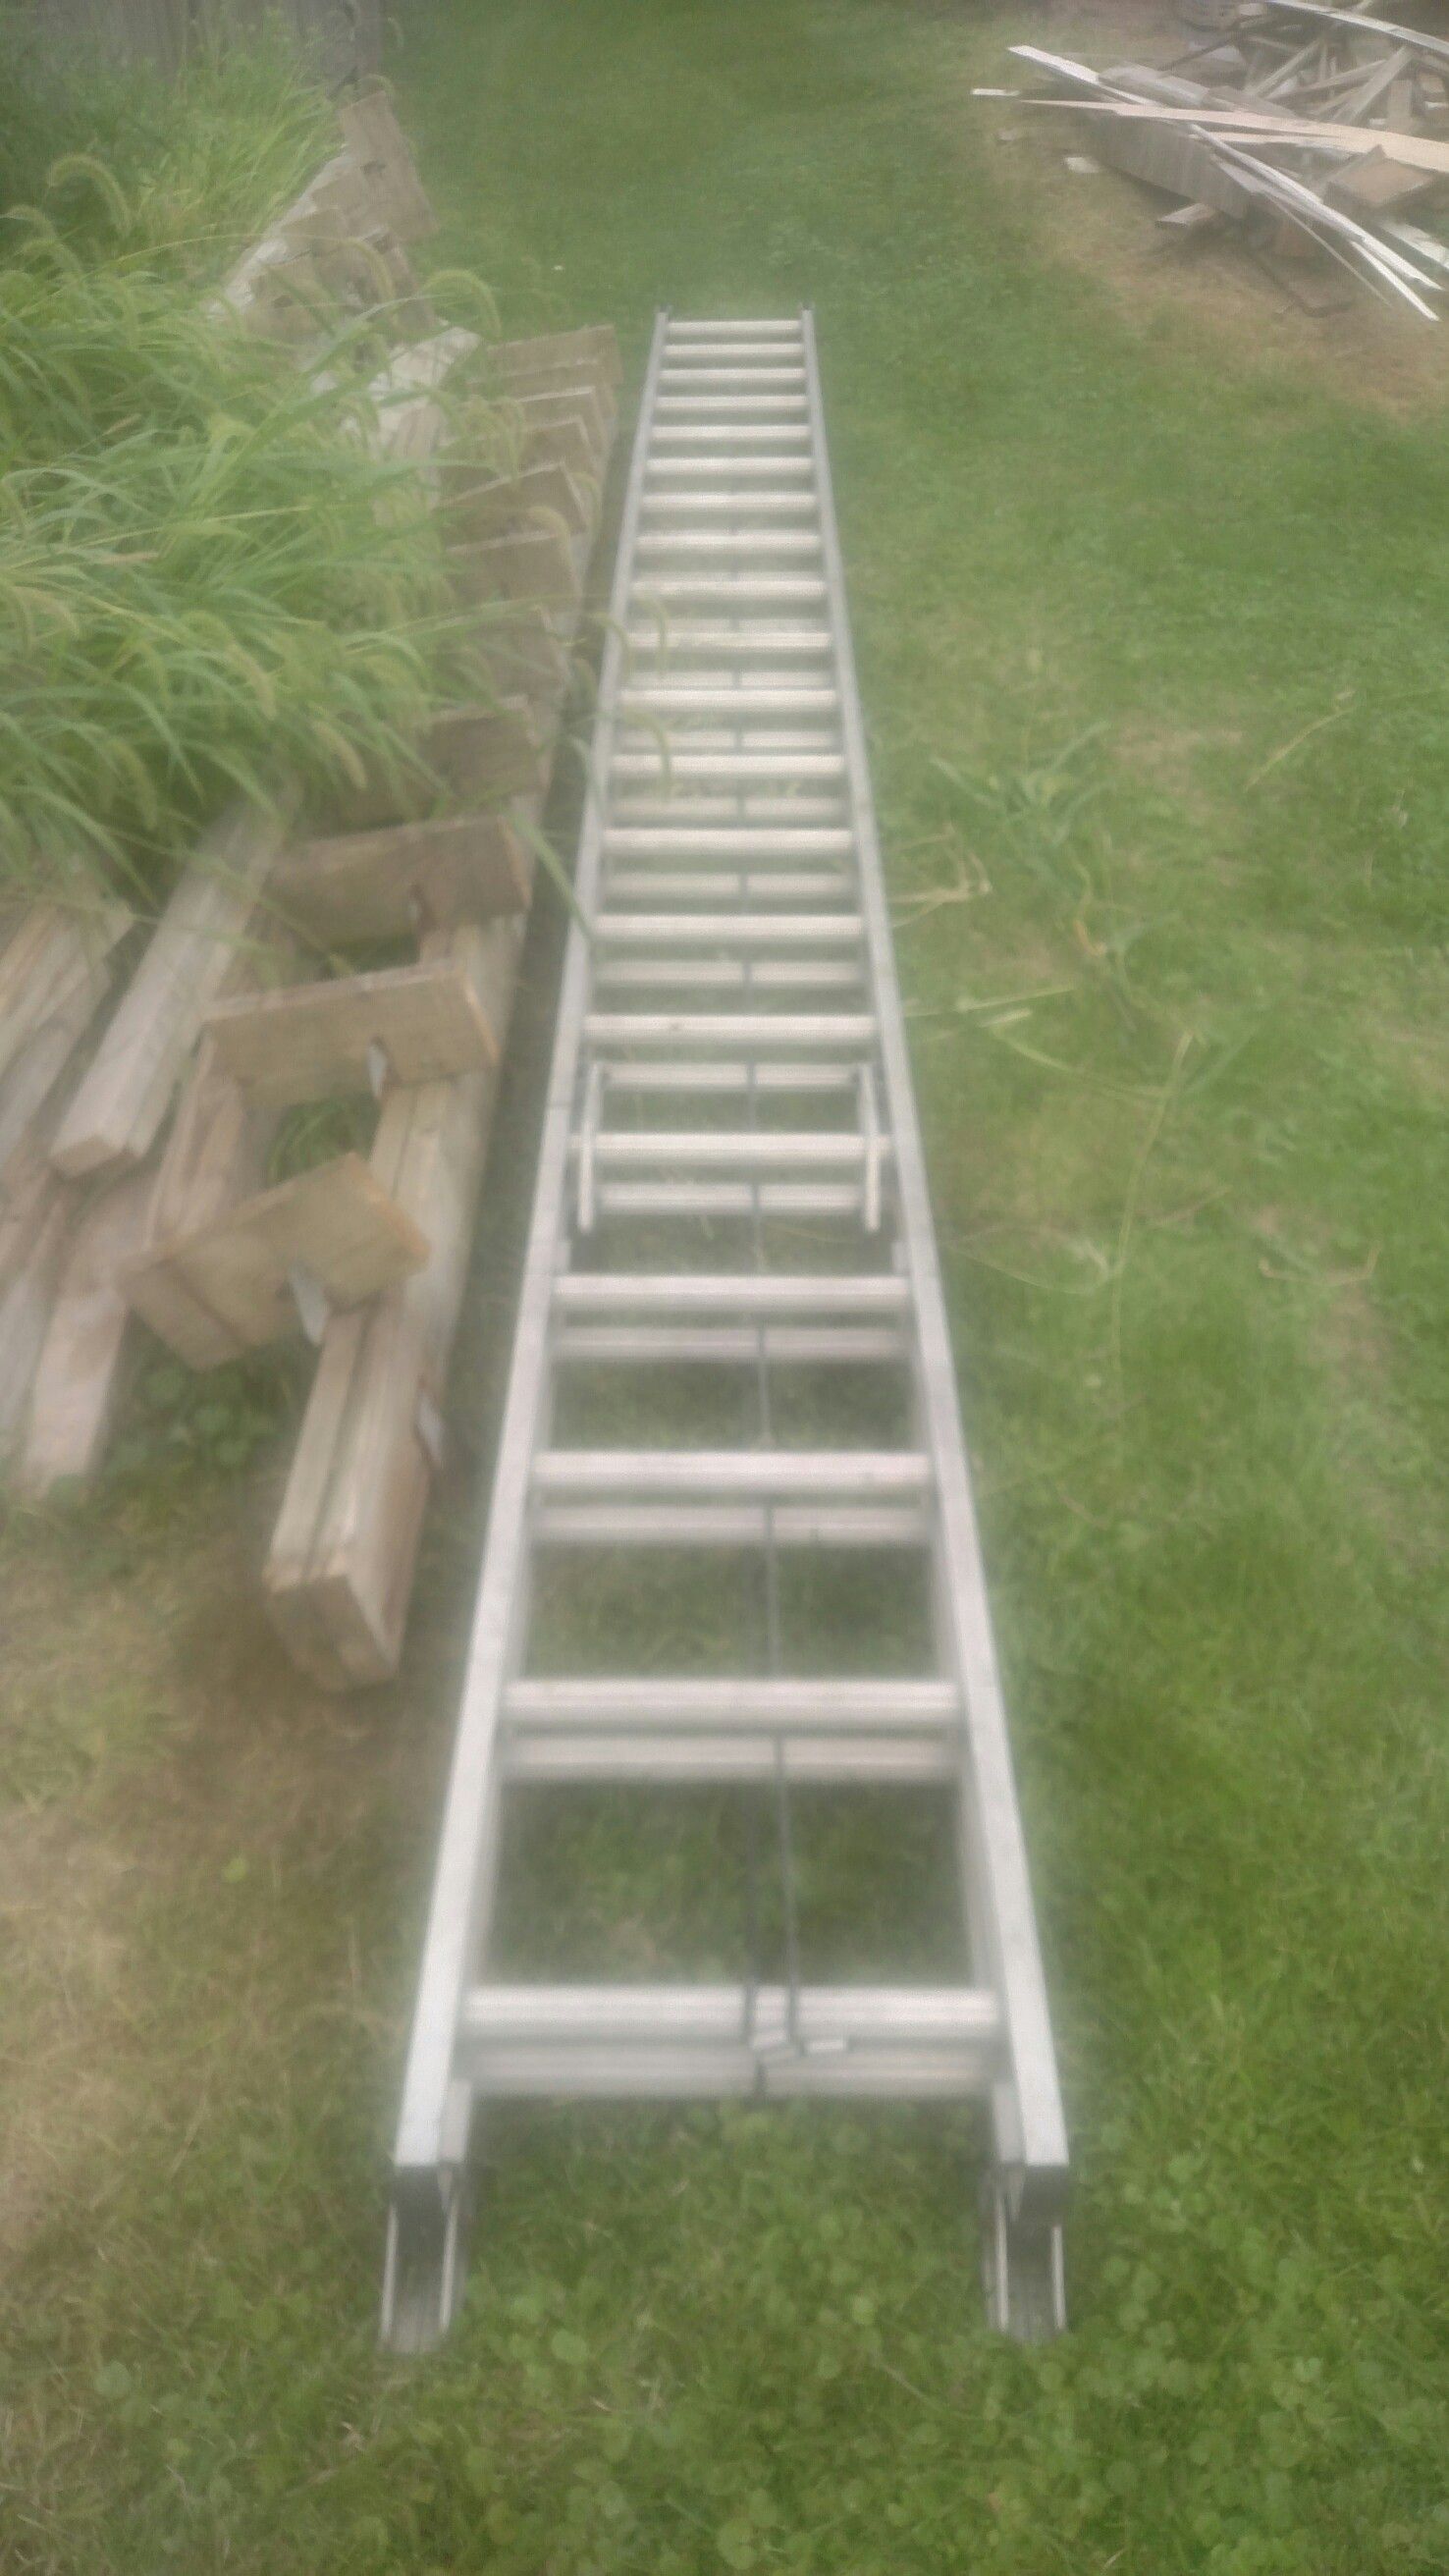 Warner extra heavy-duty 40ft extension ladder